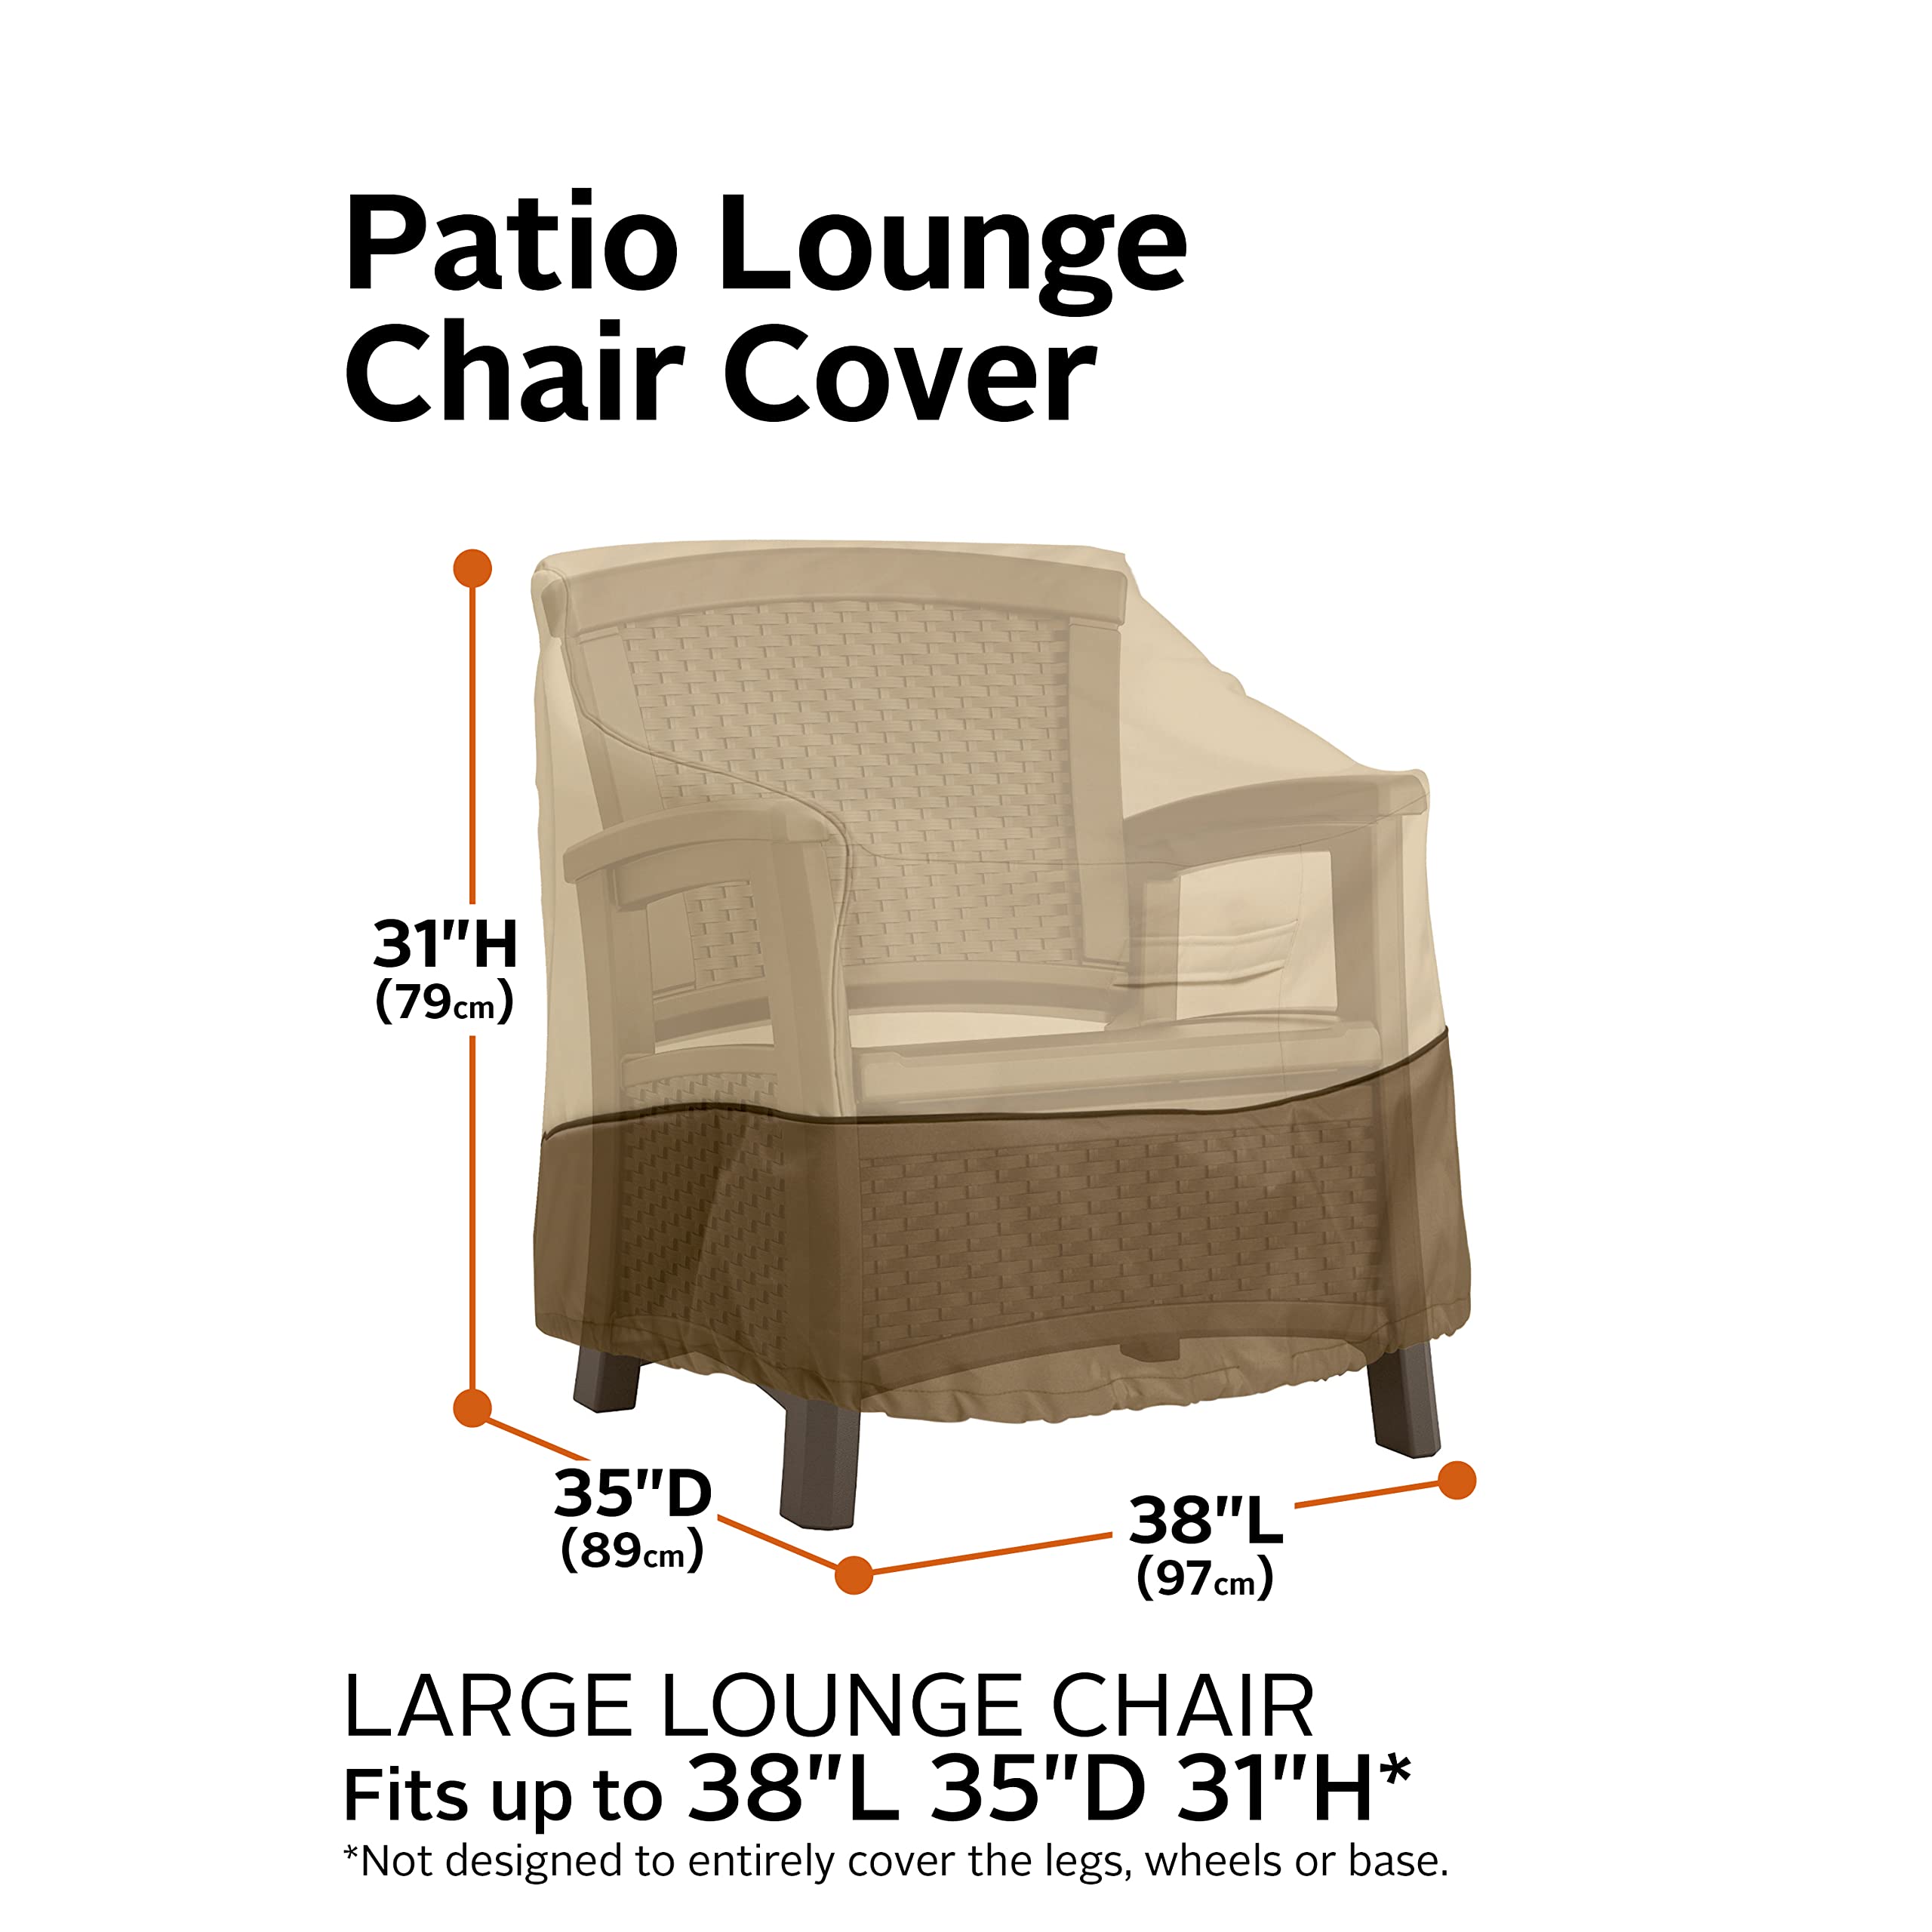 Classic Accessories Veranda Patio Lounge Chair Cover for Wicker Furniture, Large